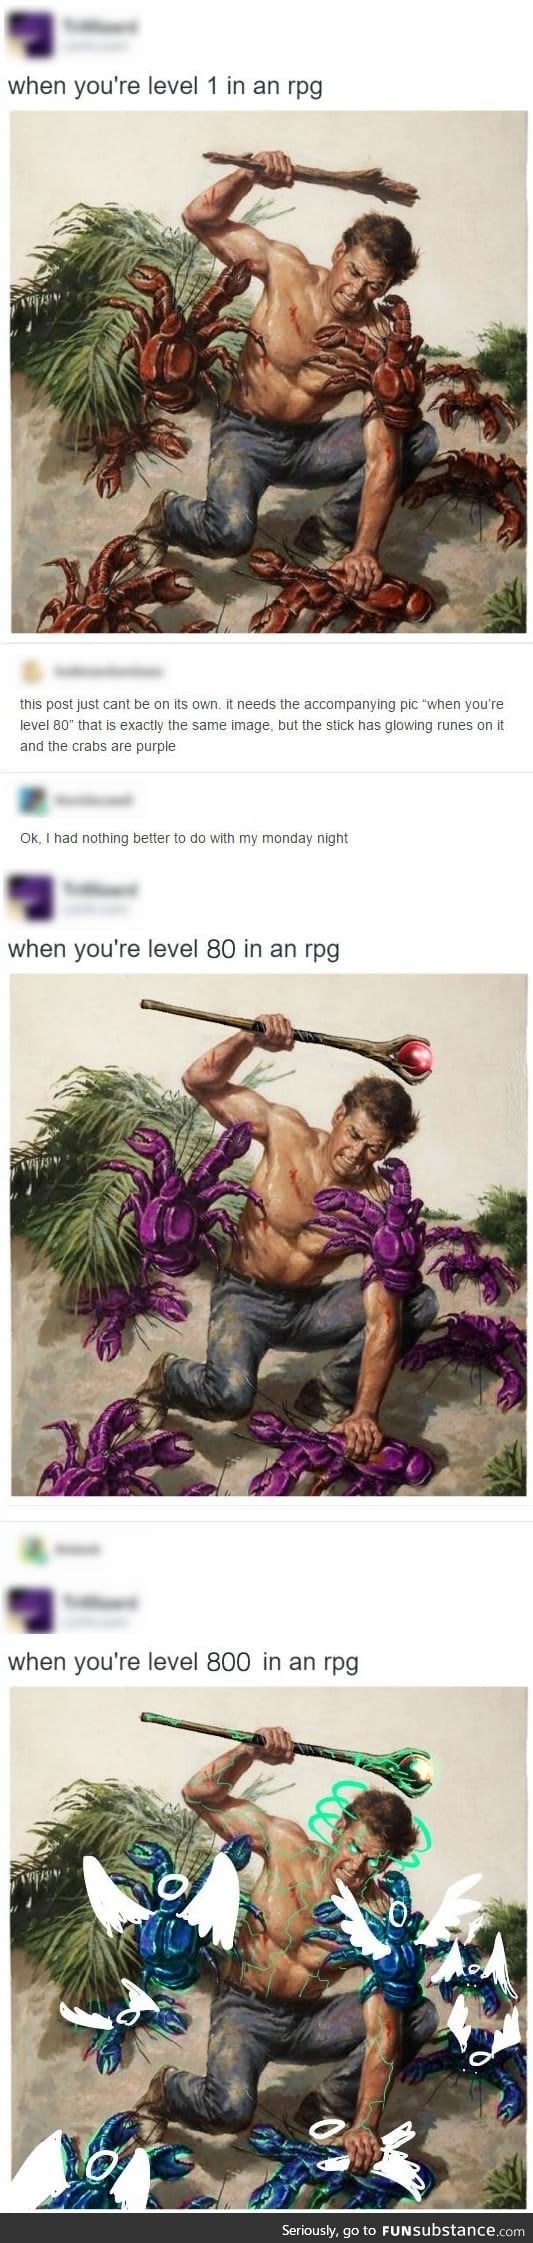 RPG leveling